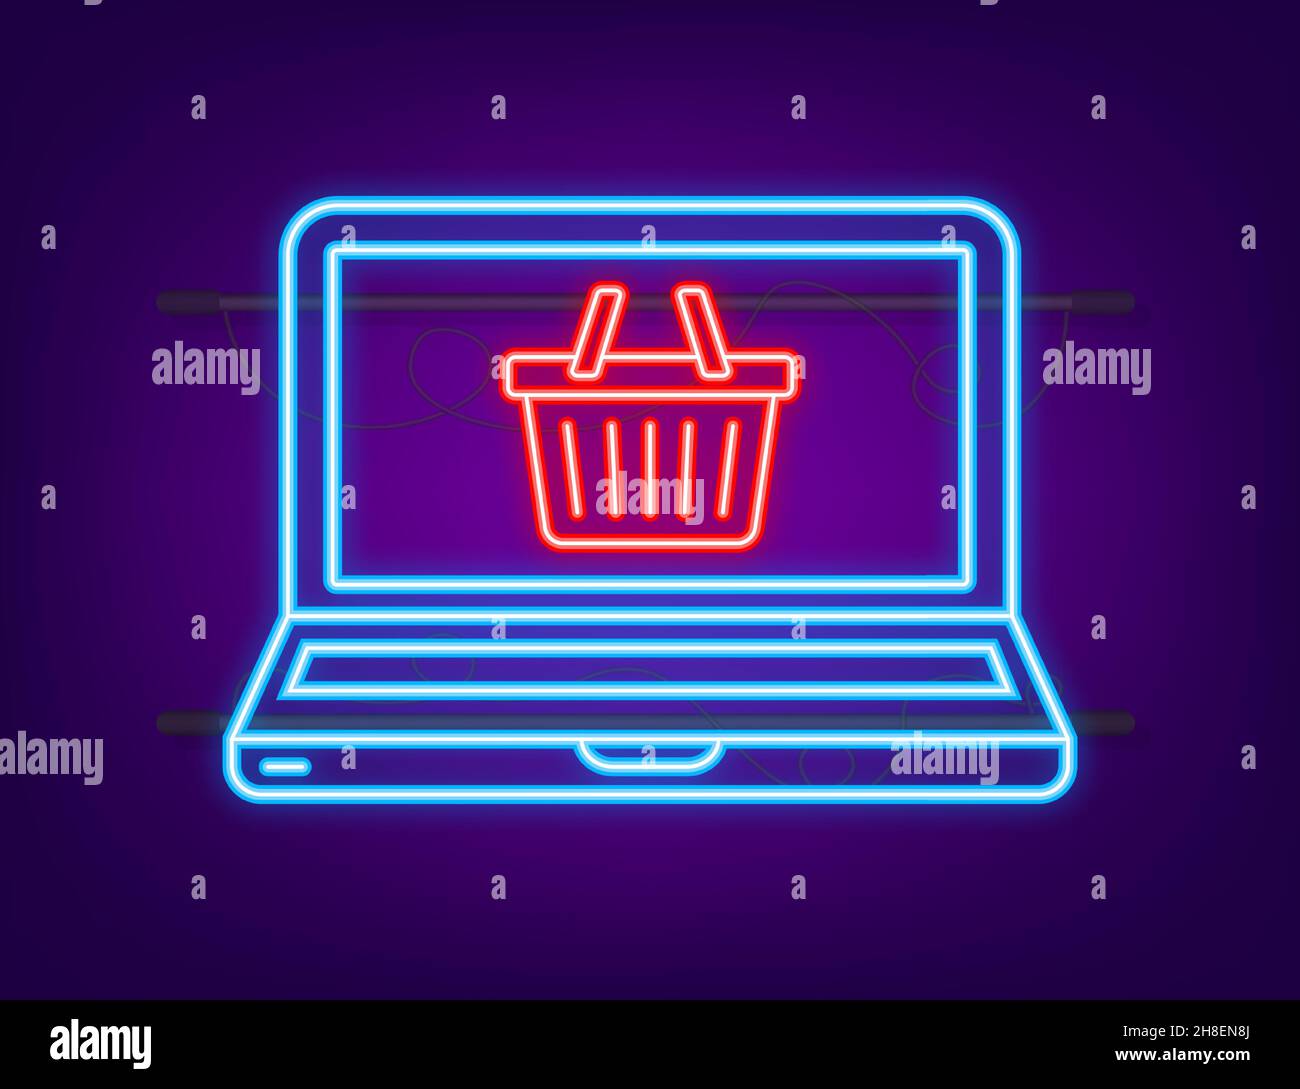 Shopping-Set Neon-Symbol für Web-Design. E-Commerce. Rabattgutschein. Business-Symbol. Preisschild. Linienvektor. Vektorgrafik Stock Vektor